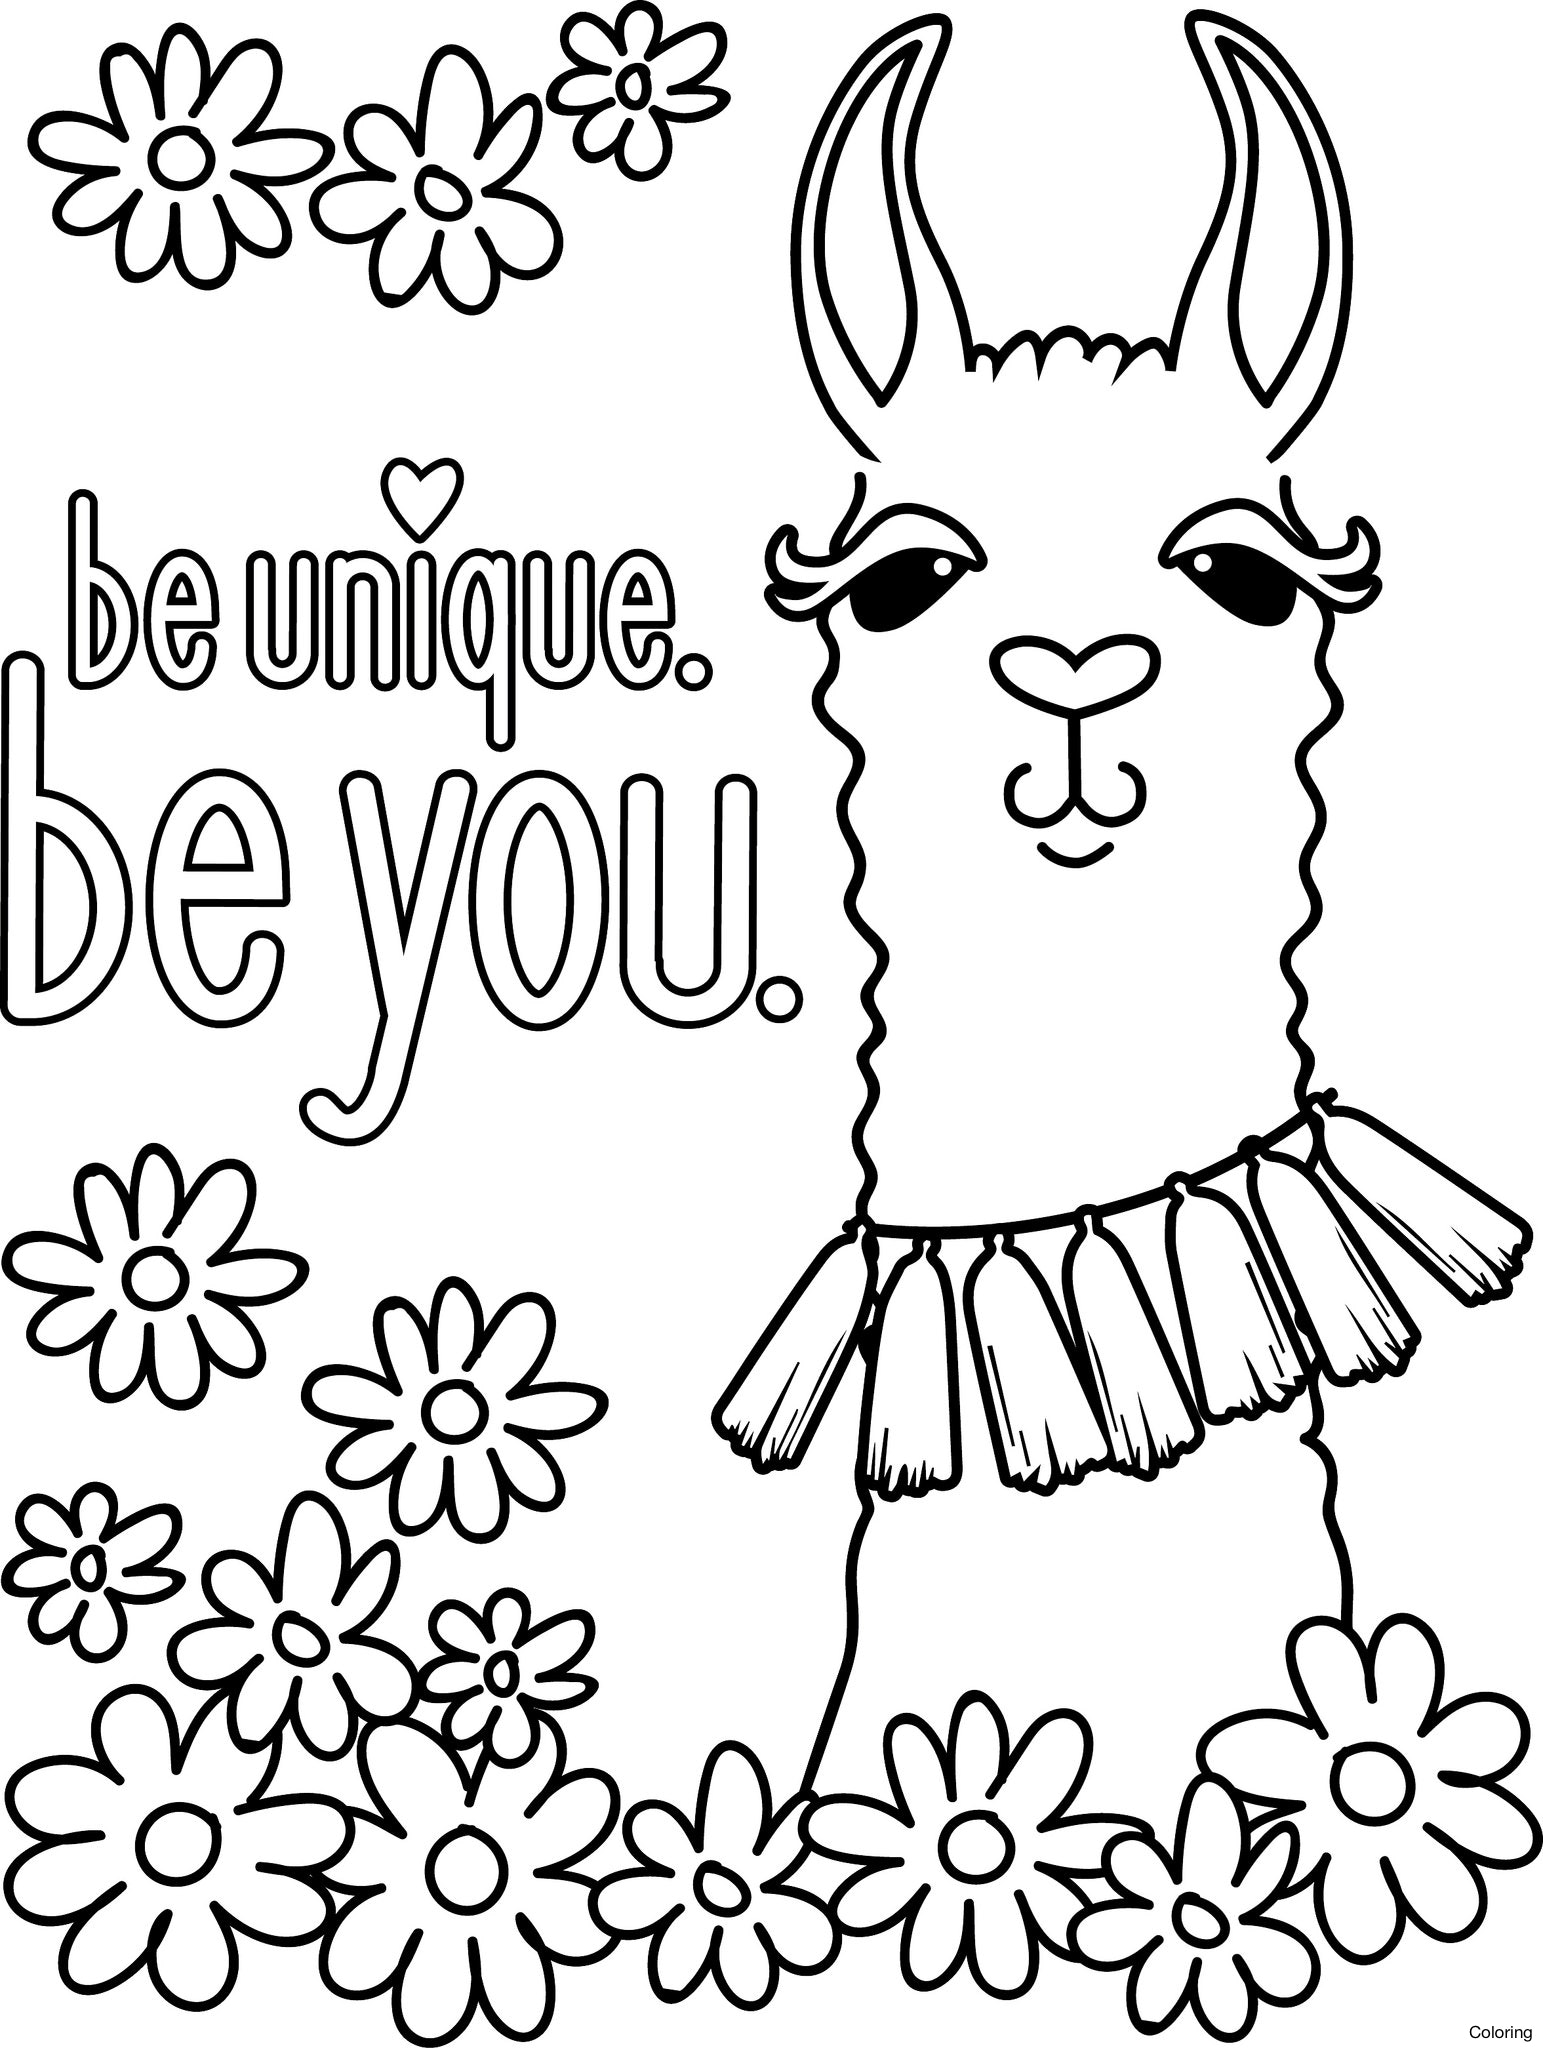 Cute Llama Coloring Pages at GetColorings.com | Free ...